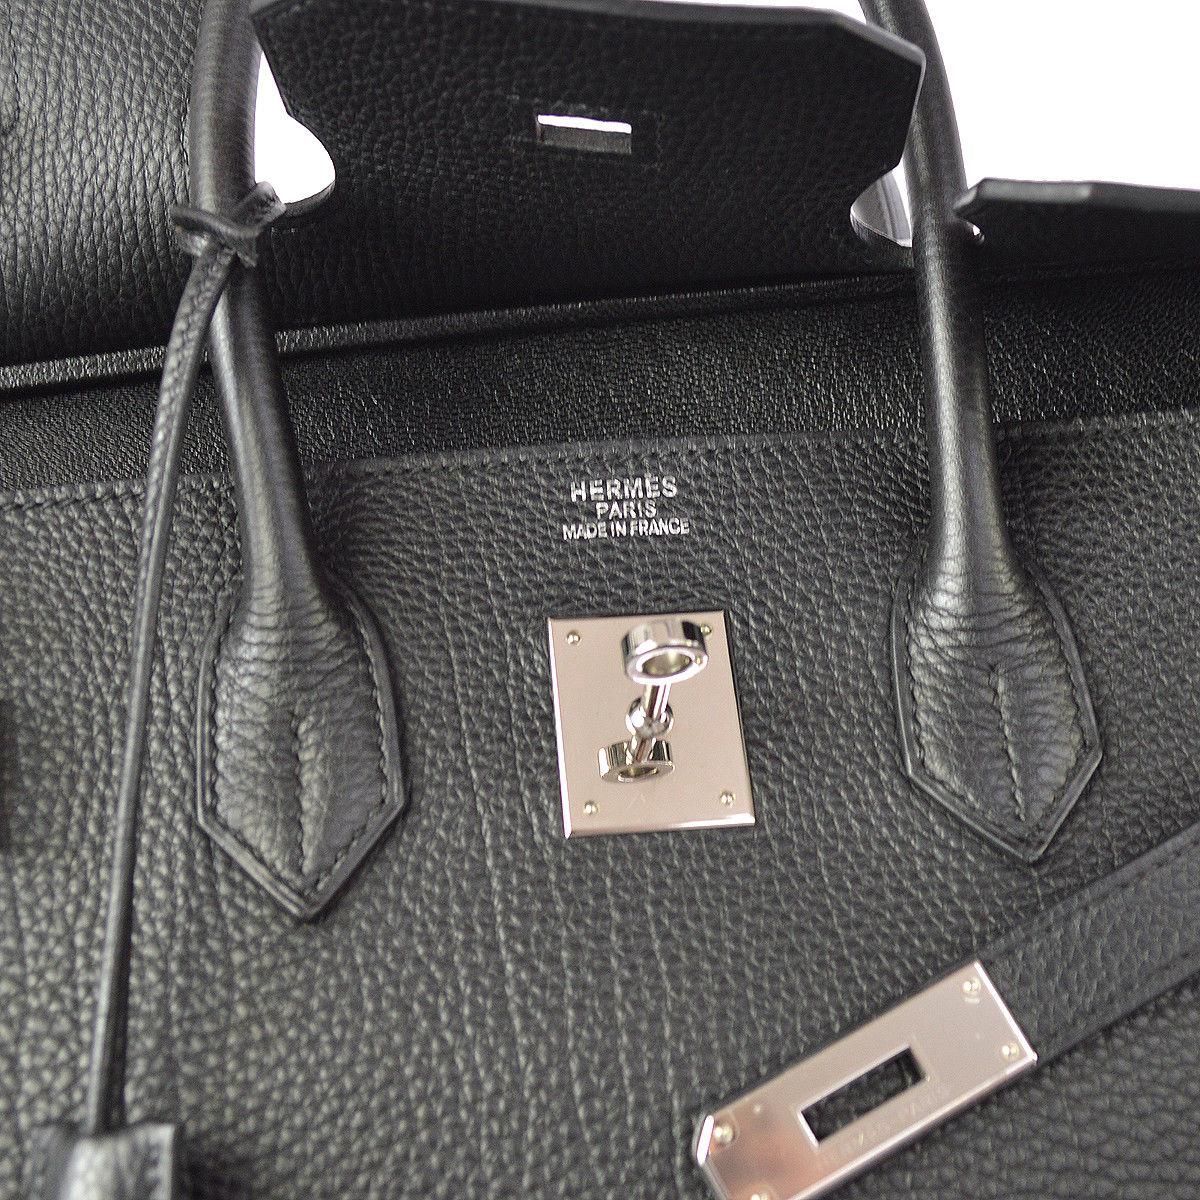 Women's Hermes Birkin 35 Black Leather Palladium Top Handle Satchel Travel Bag in Box